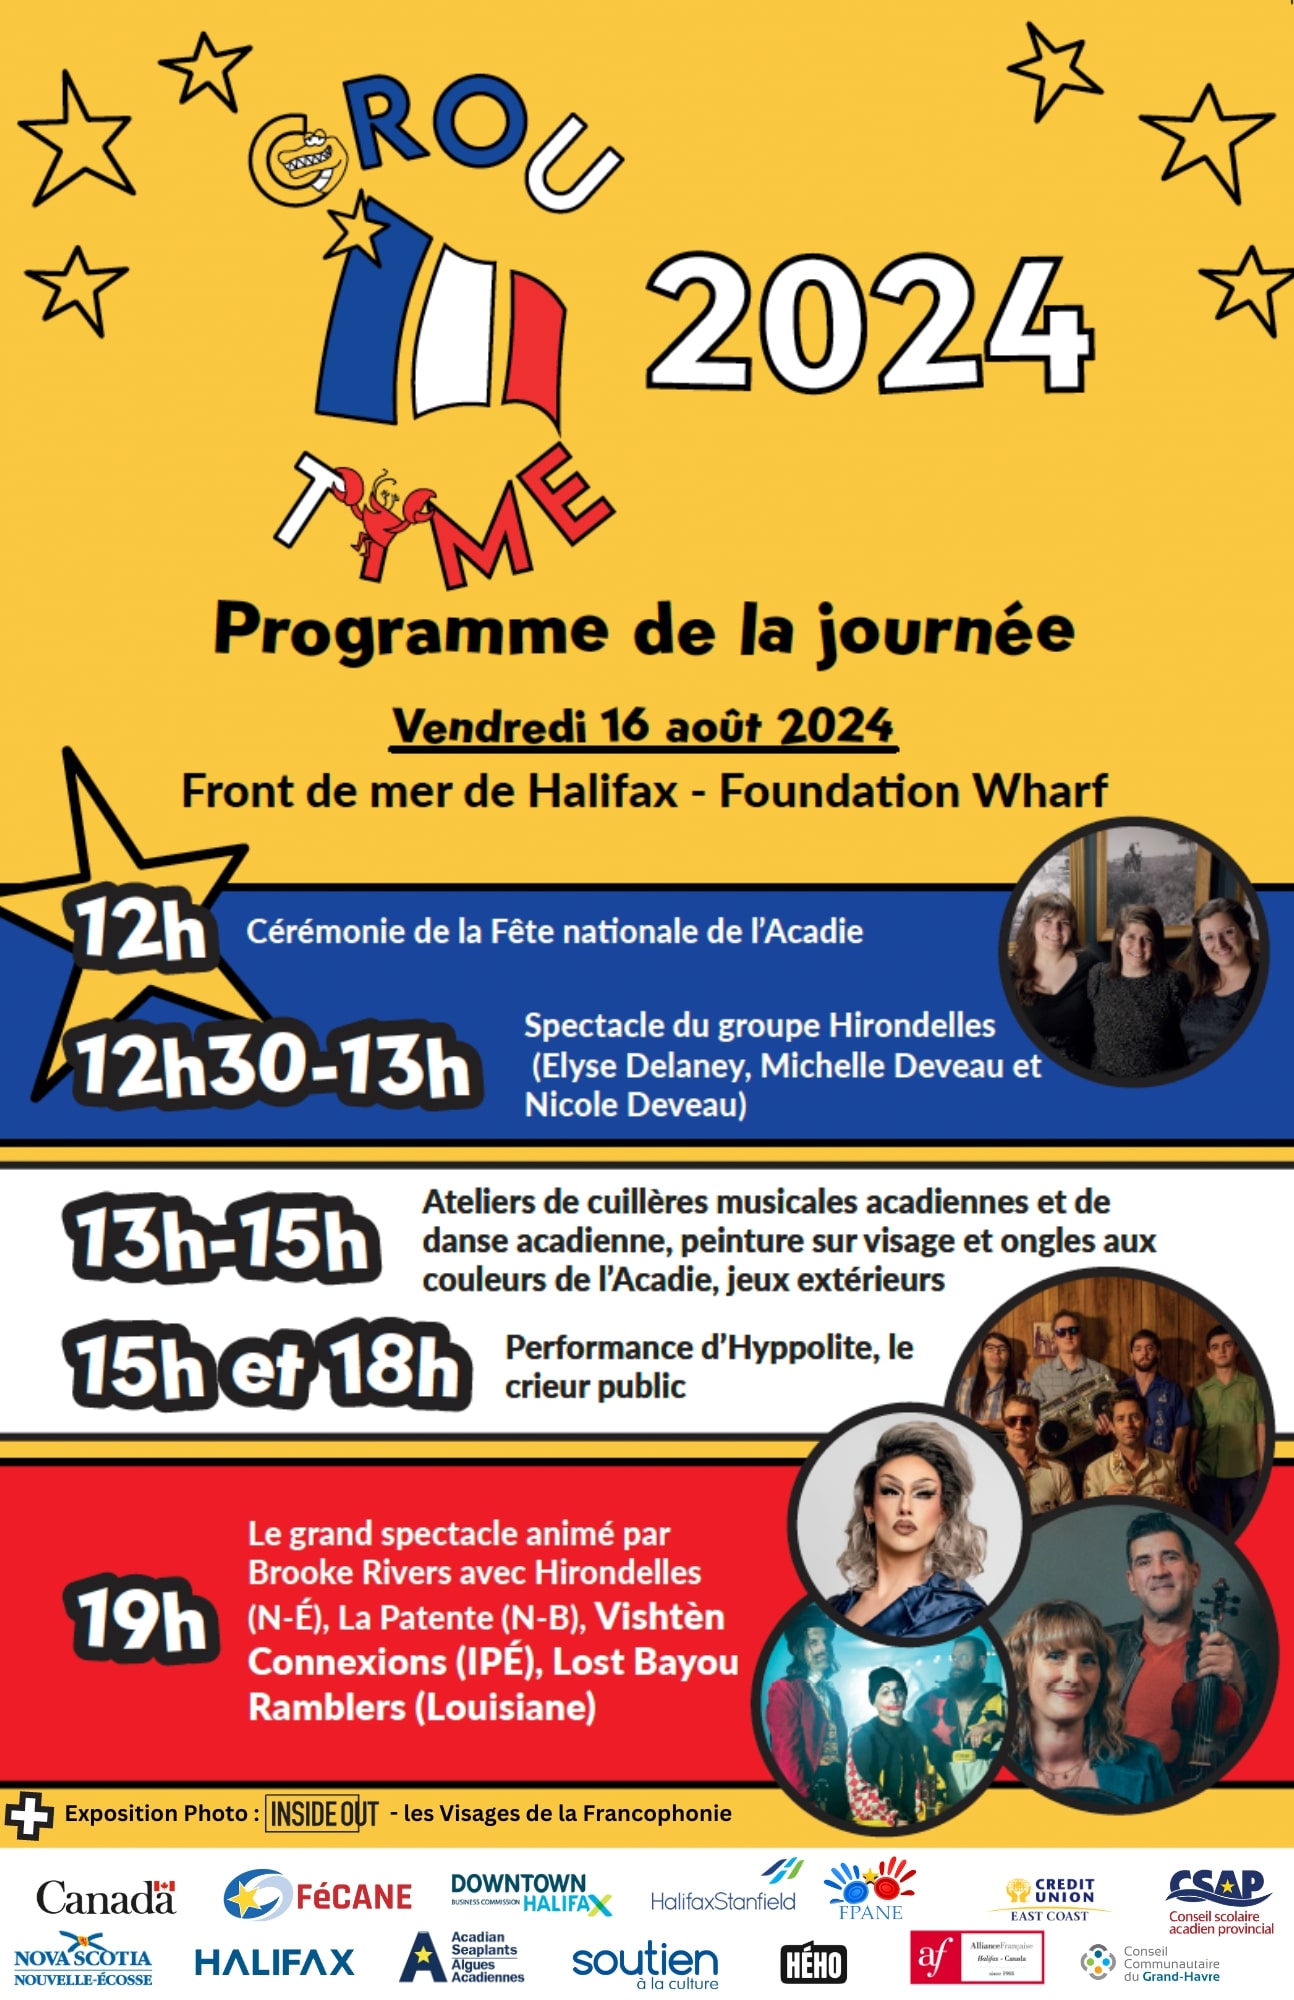 Programme du Grou Tyme 2024 Halifax